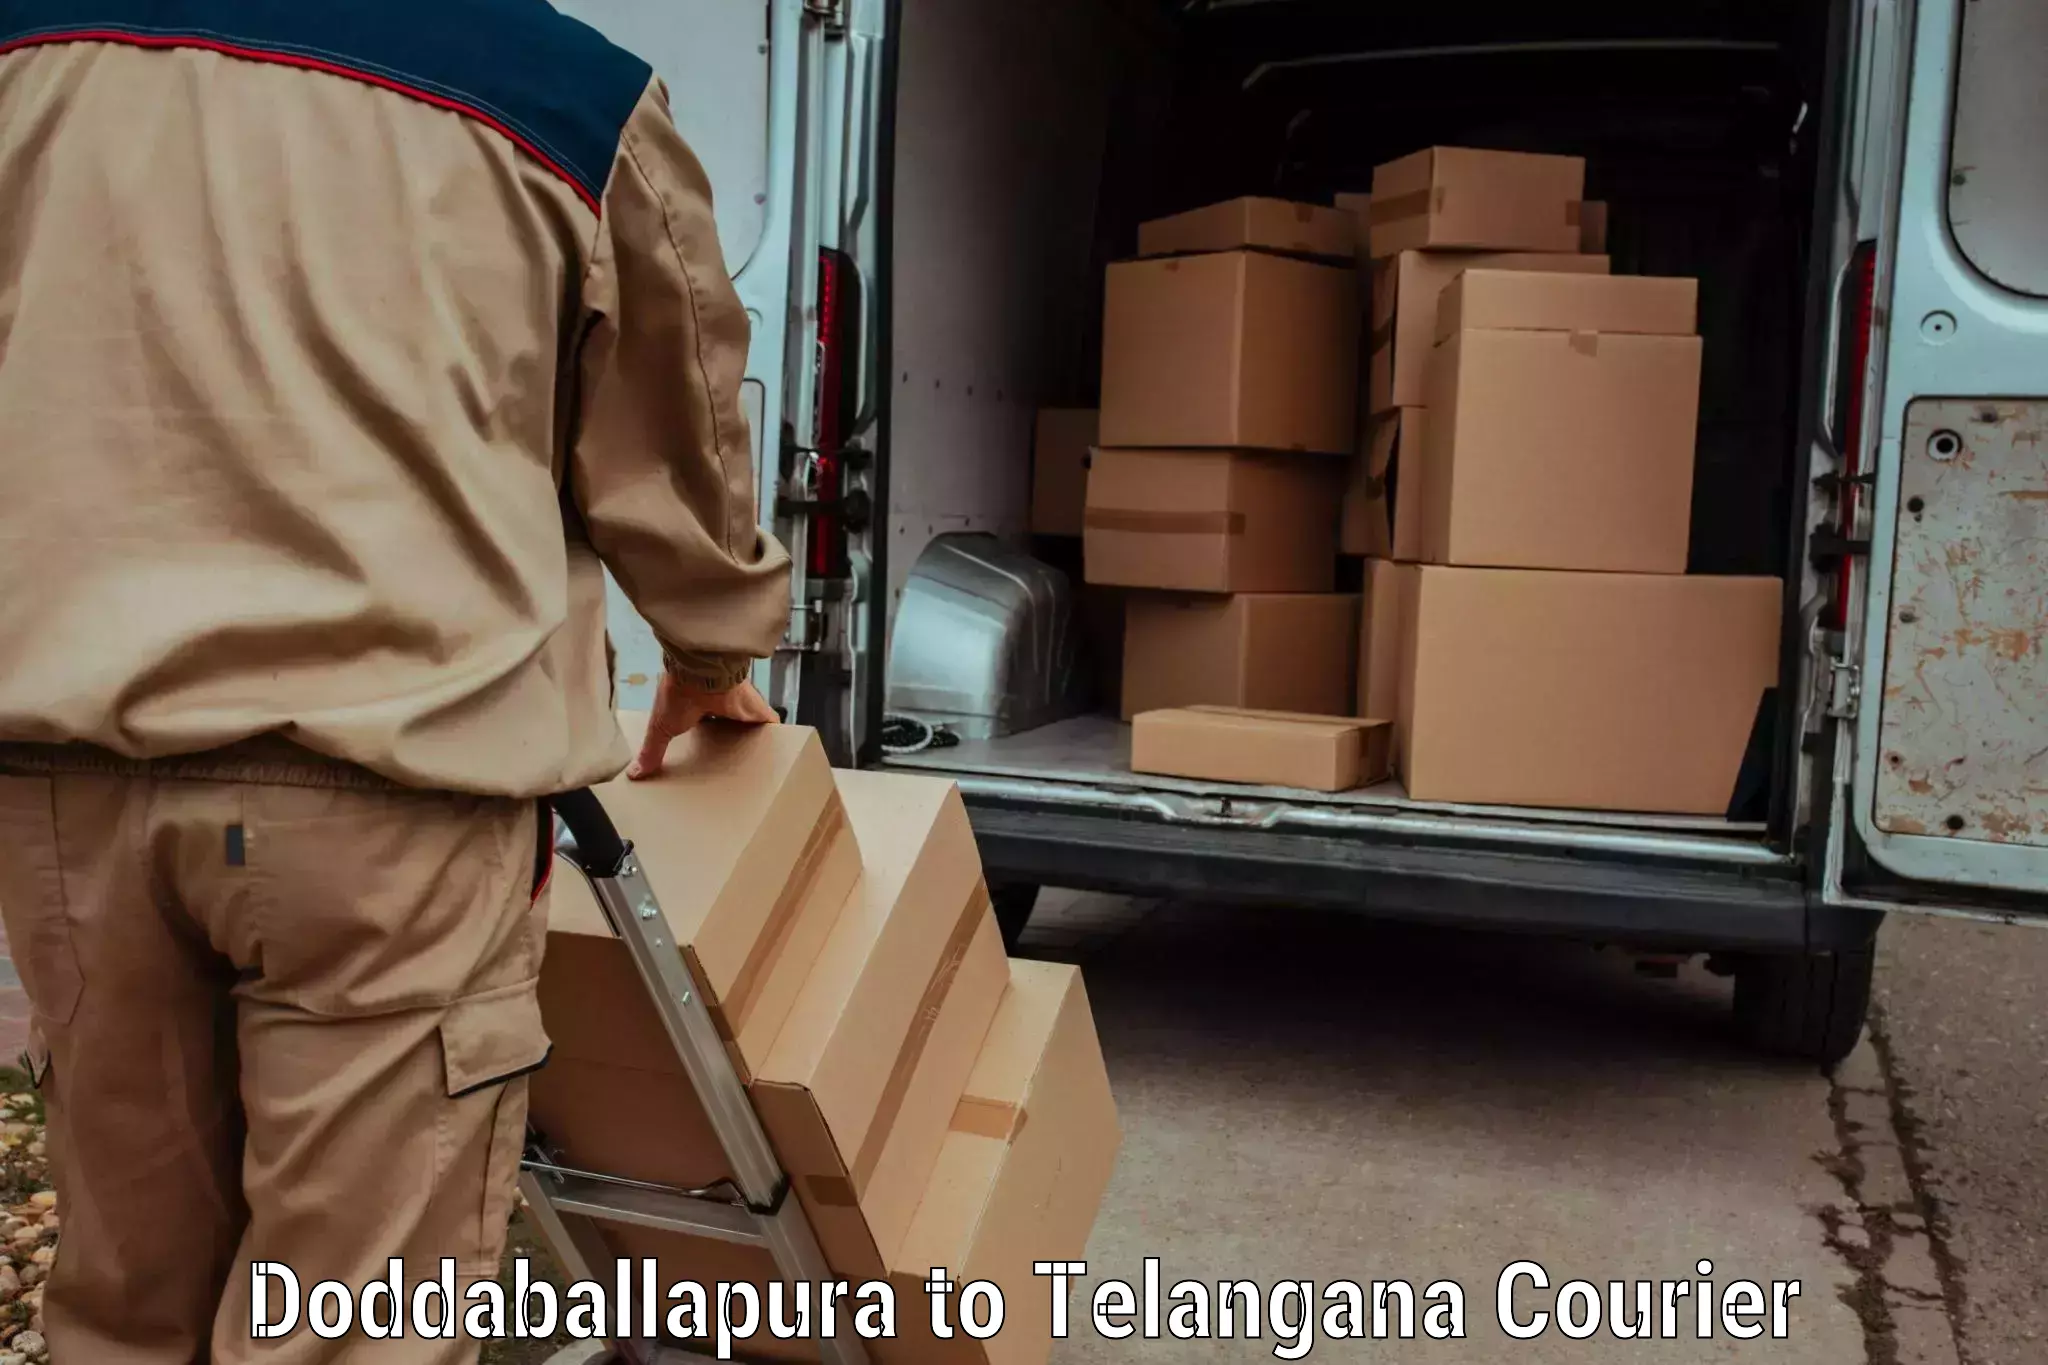 Courier service comparison Doddaballapura to Gangadhara